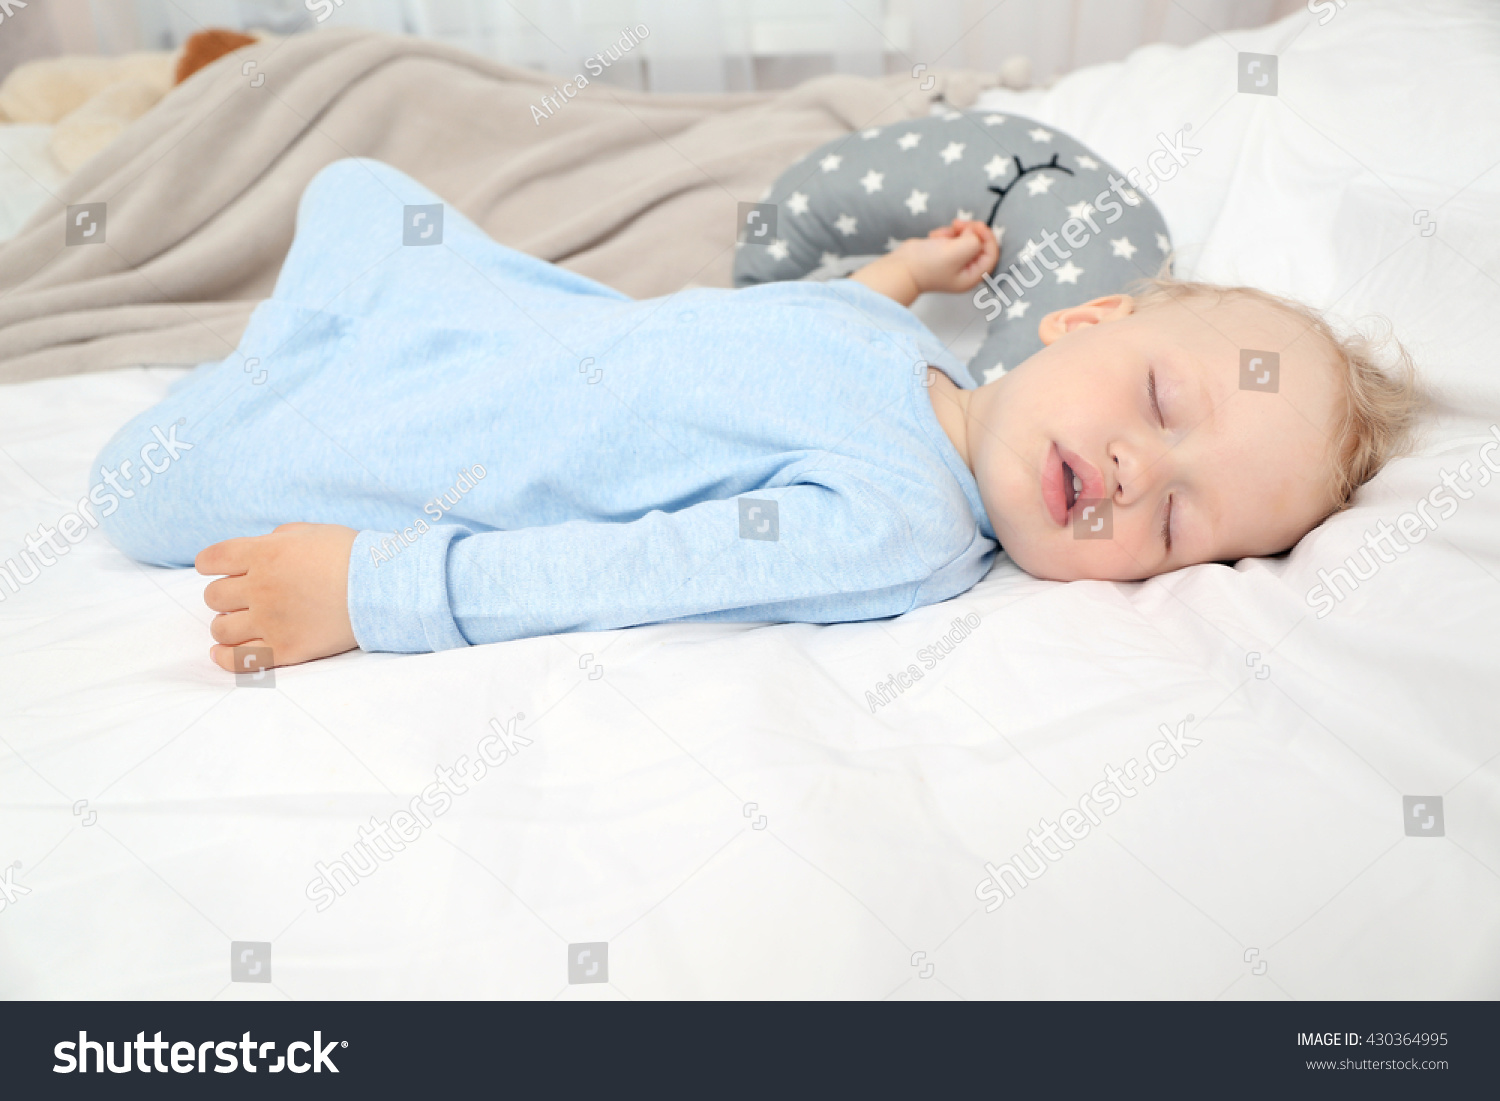 Baby sleeping on bed #430364995